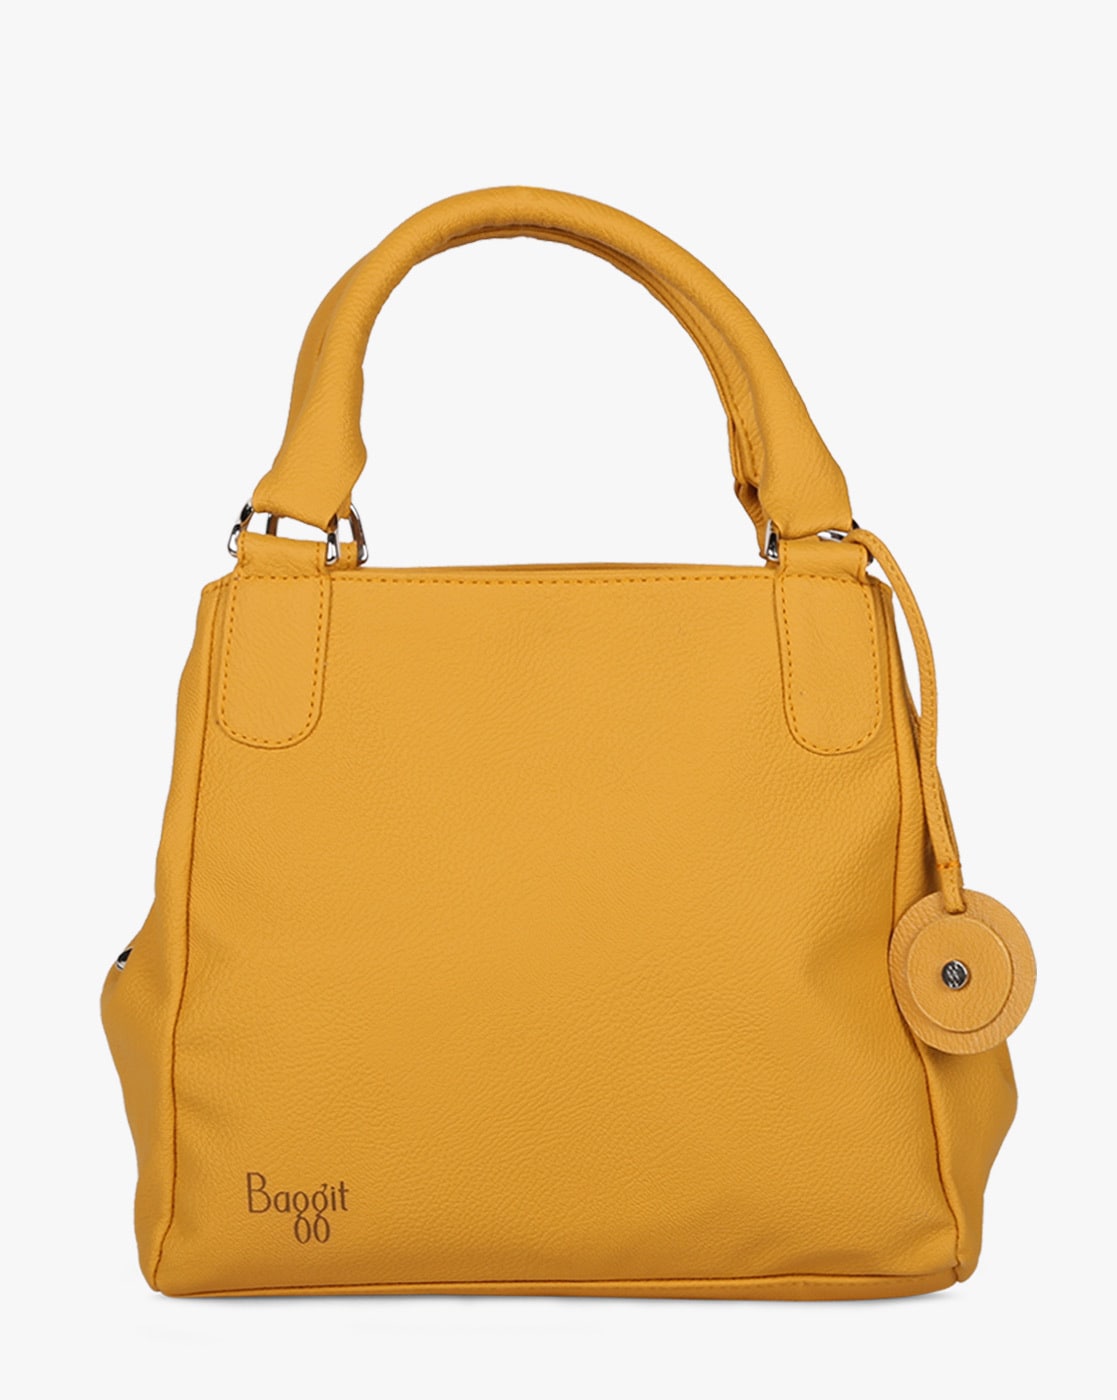 Mango spring/summer 2015 handbags collection | Fab Fashion Fix | Hobo bag,  Bags, Hobo